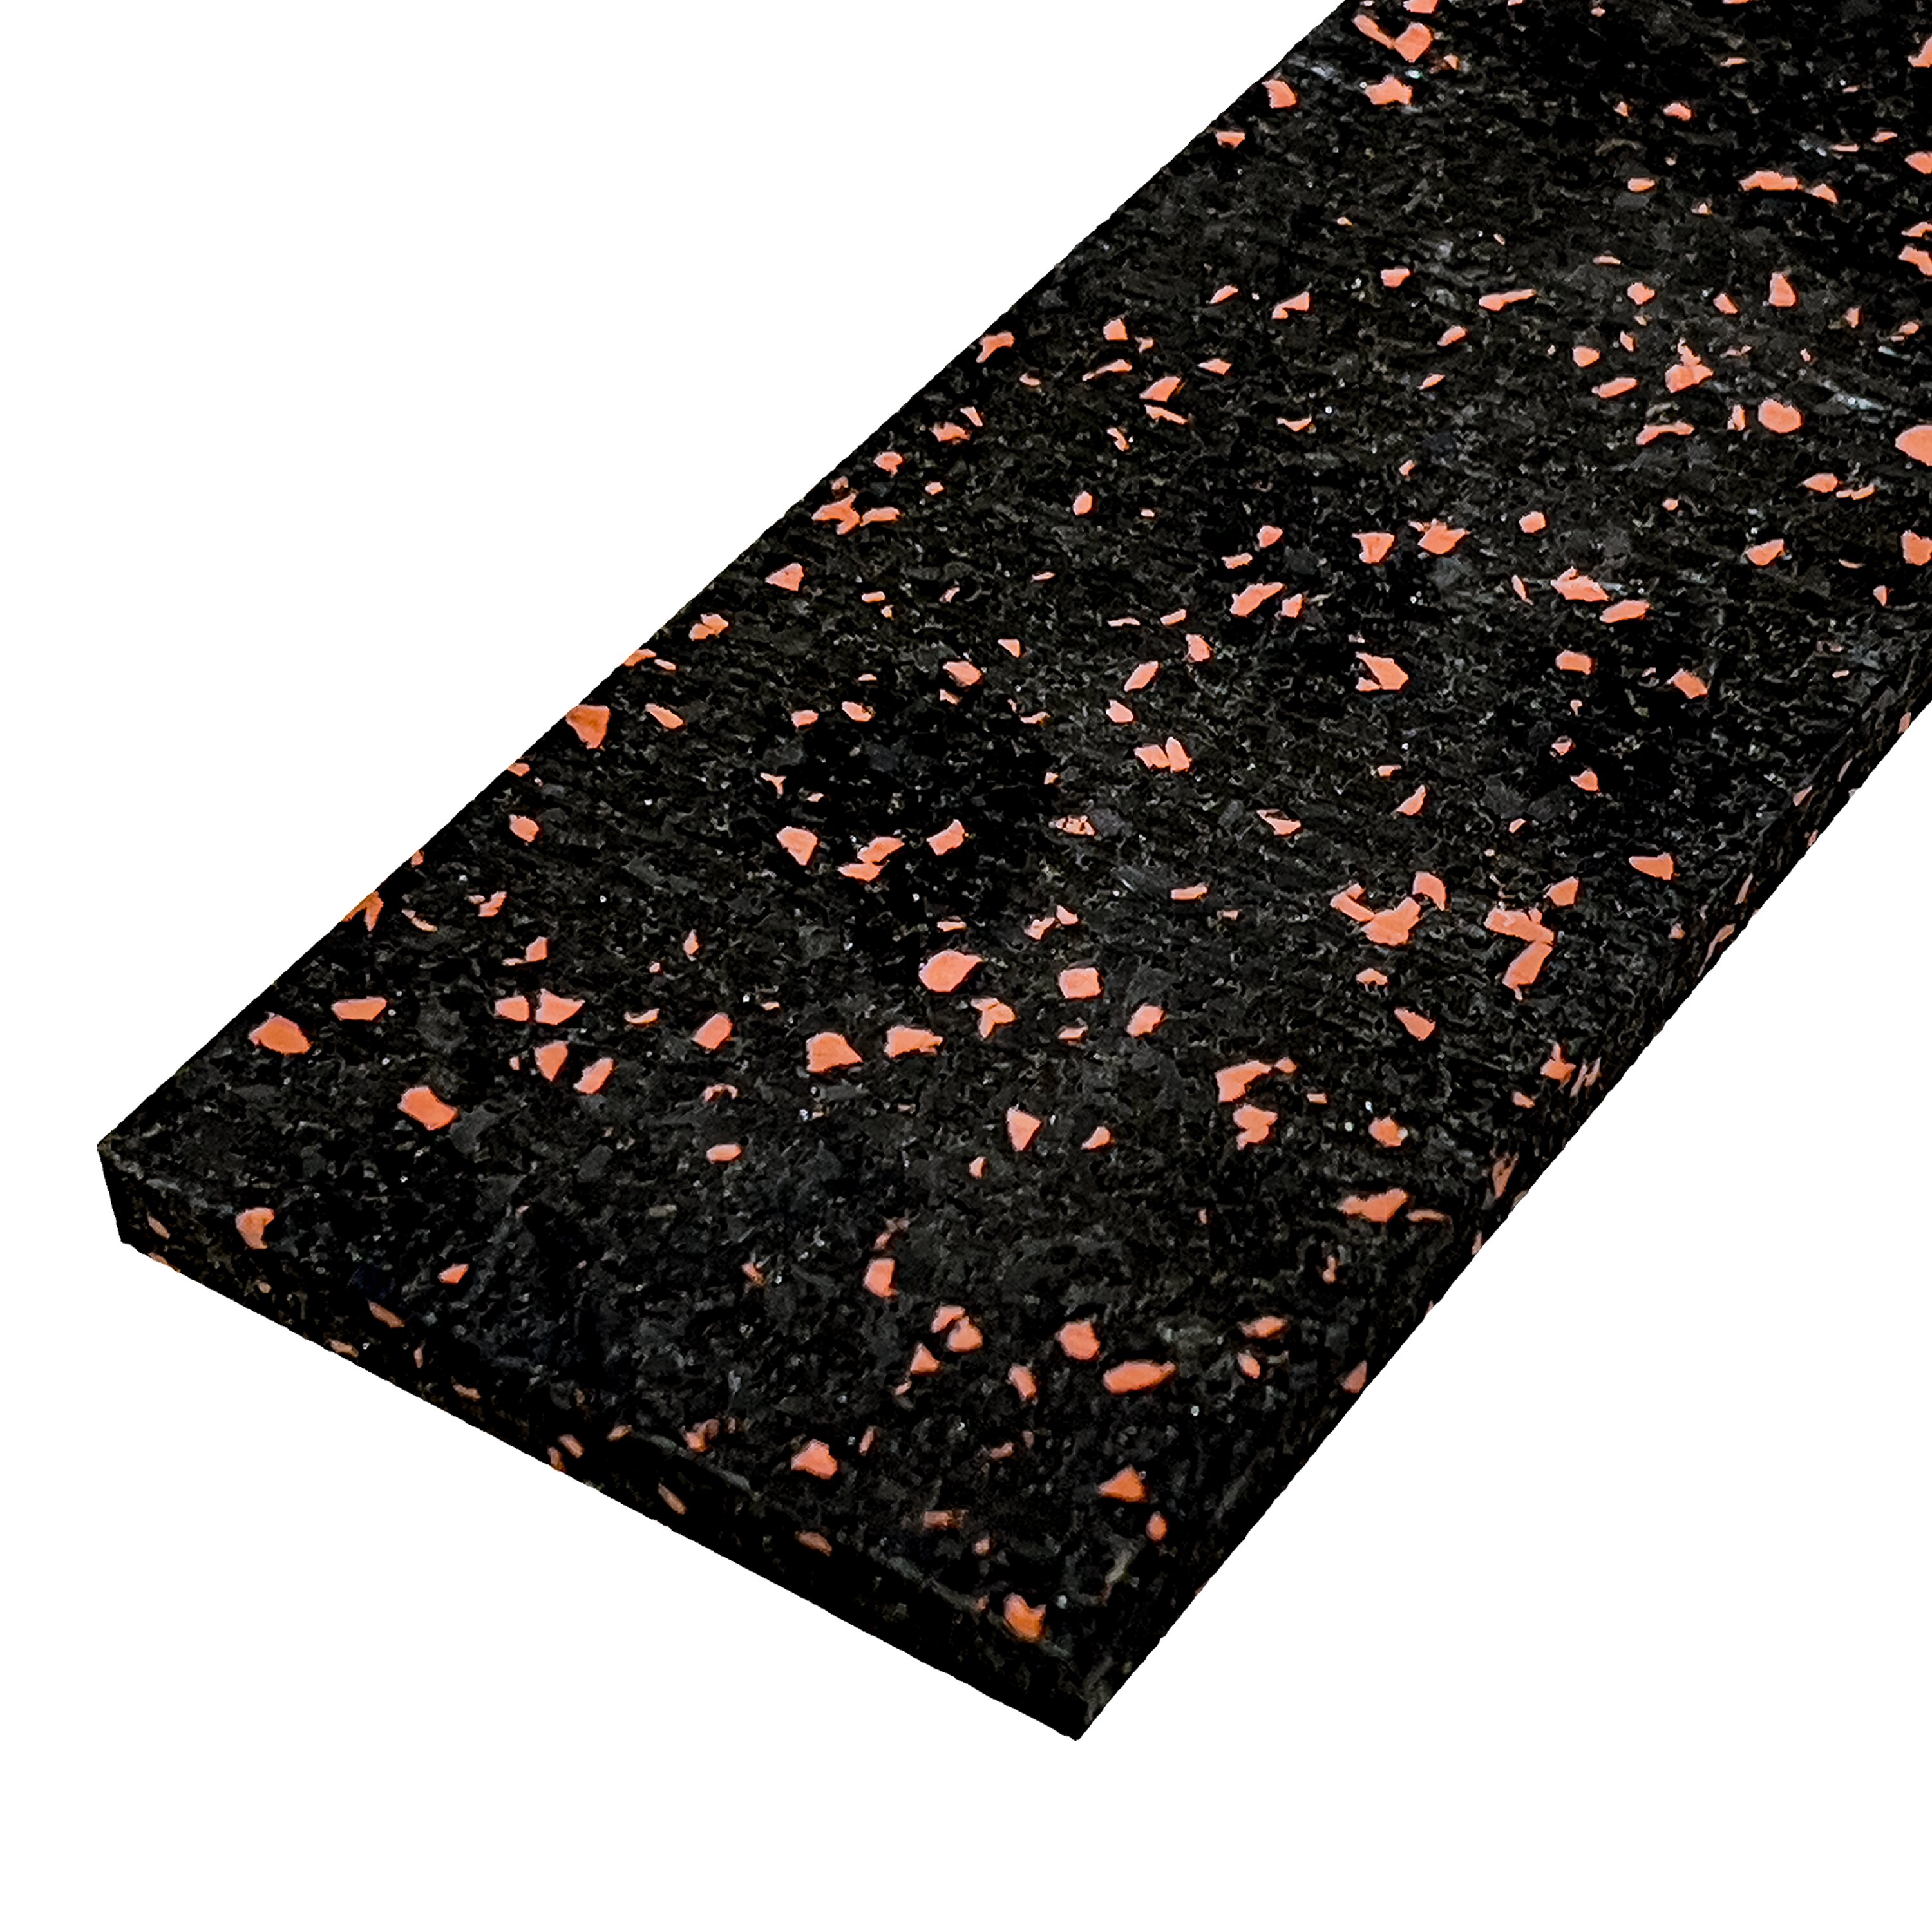 Čierno-červená gumová soklová podlahová lišta FLOMA FitFlo IceFlo - dĺžka 200 cm, šírka 7 cm, hrúbka 0,8 cm